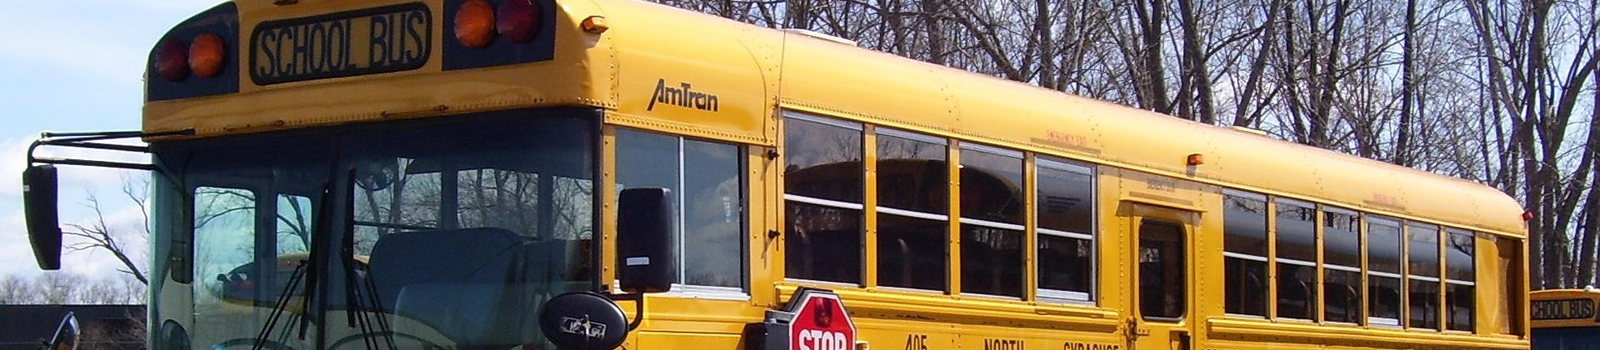 parked school bus